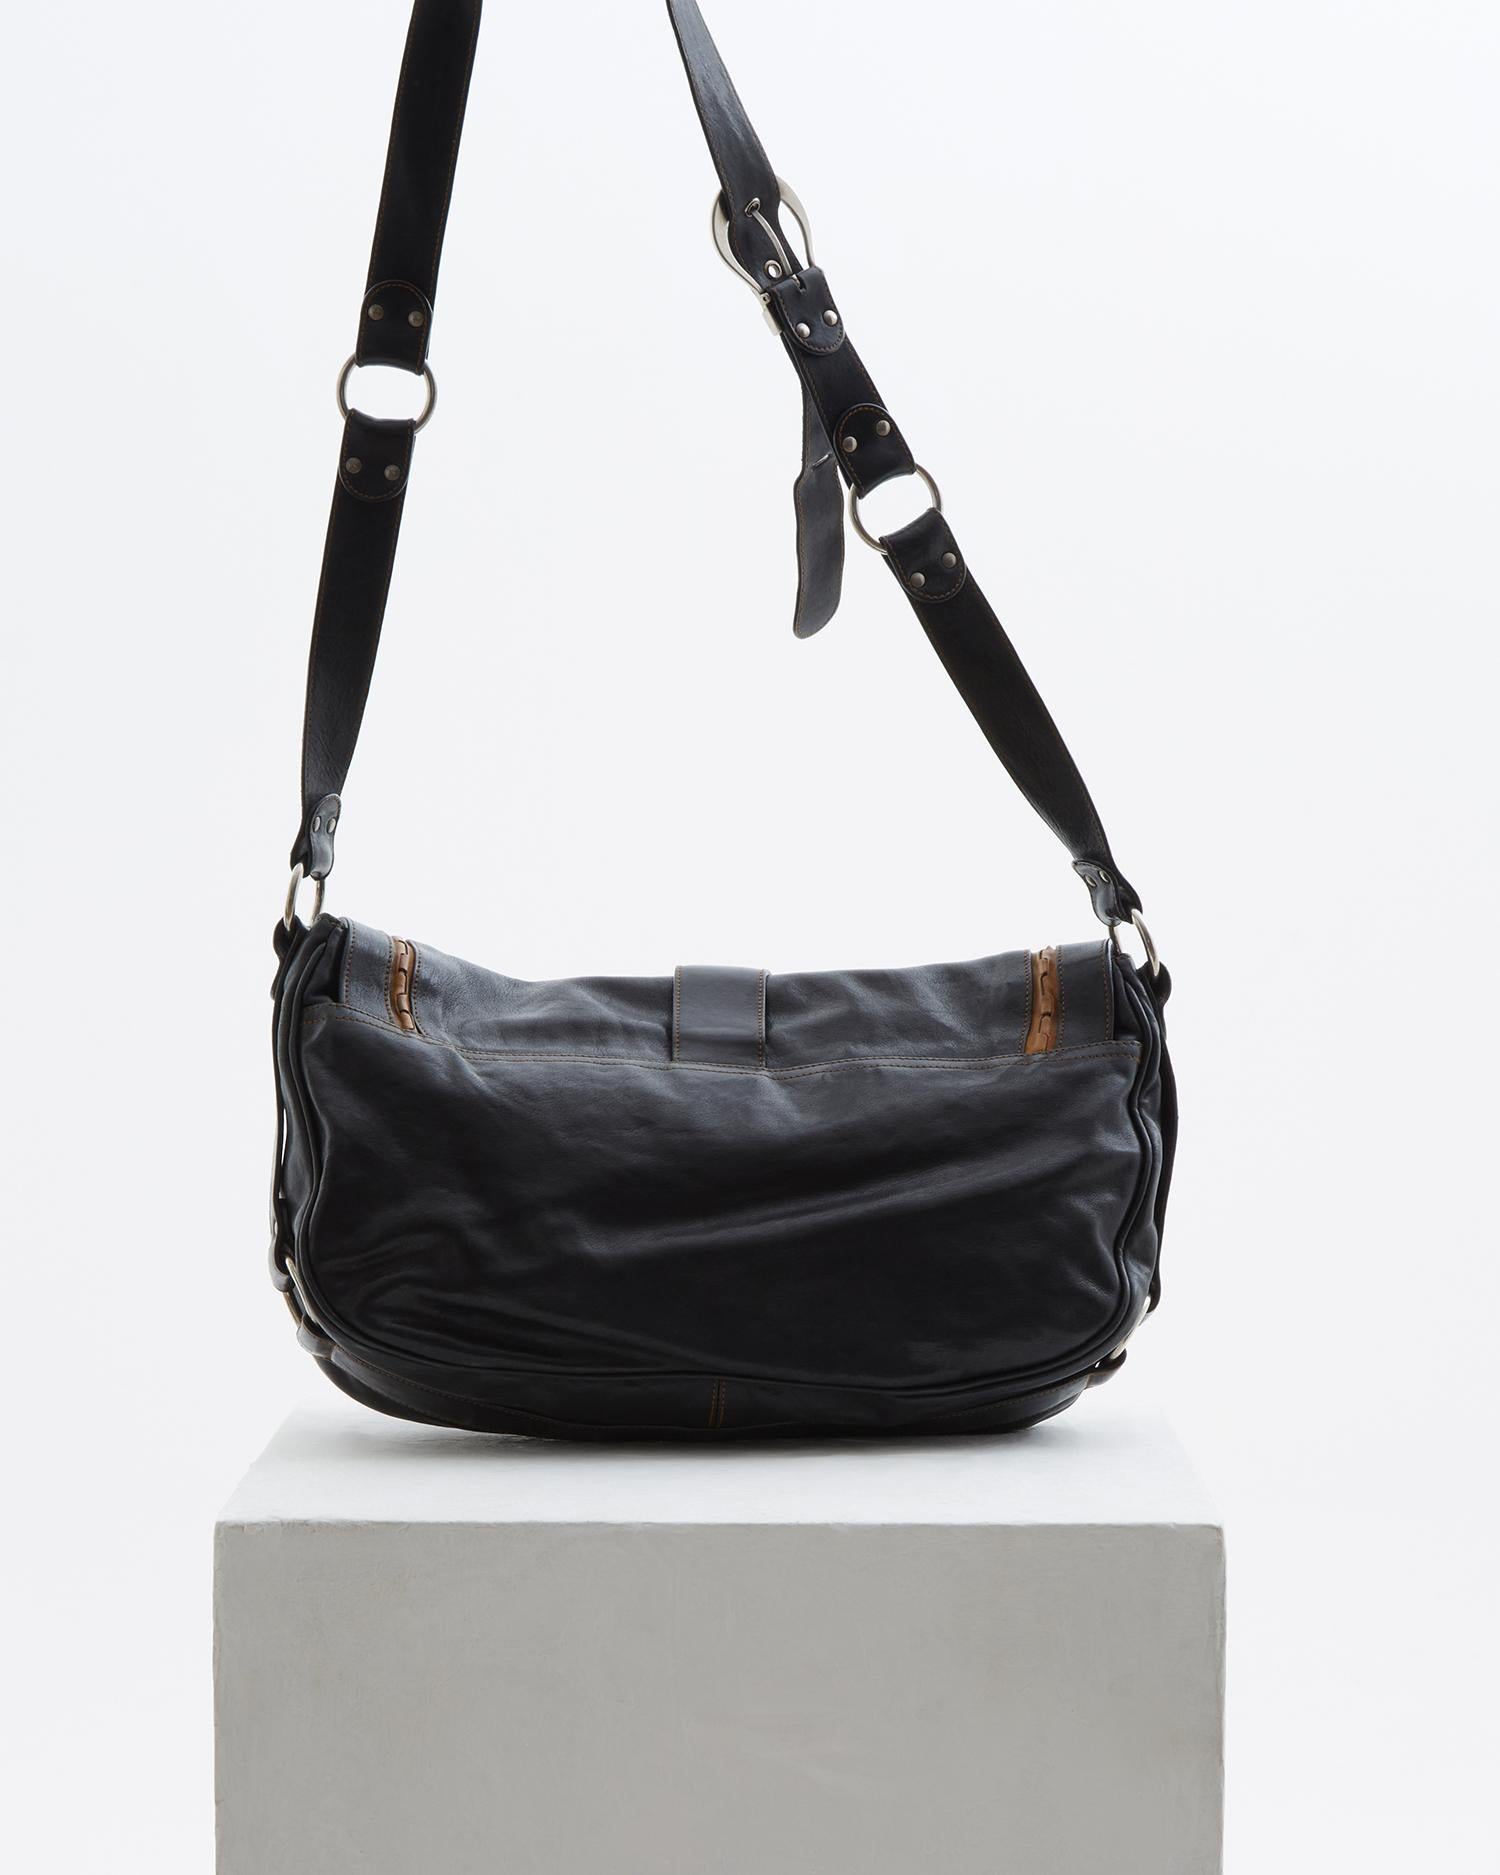 Women's Christian Dior by John Galliano “Gaucho” black and tan shoulder bag, ss 2006